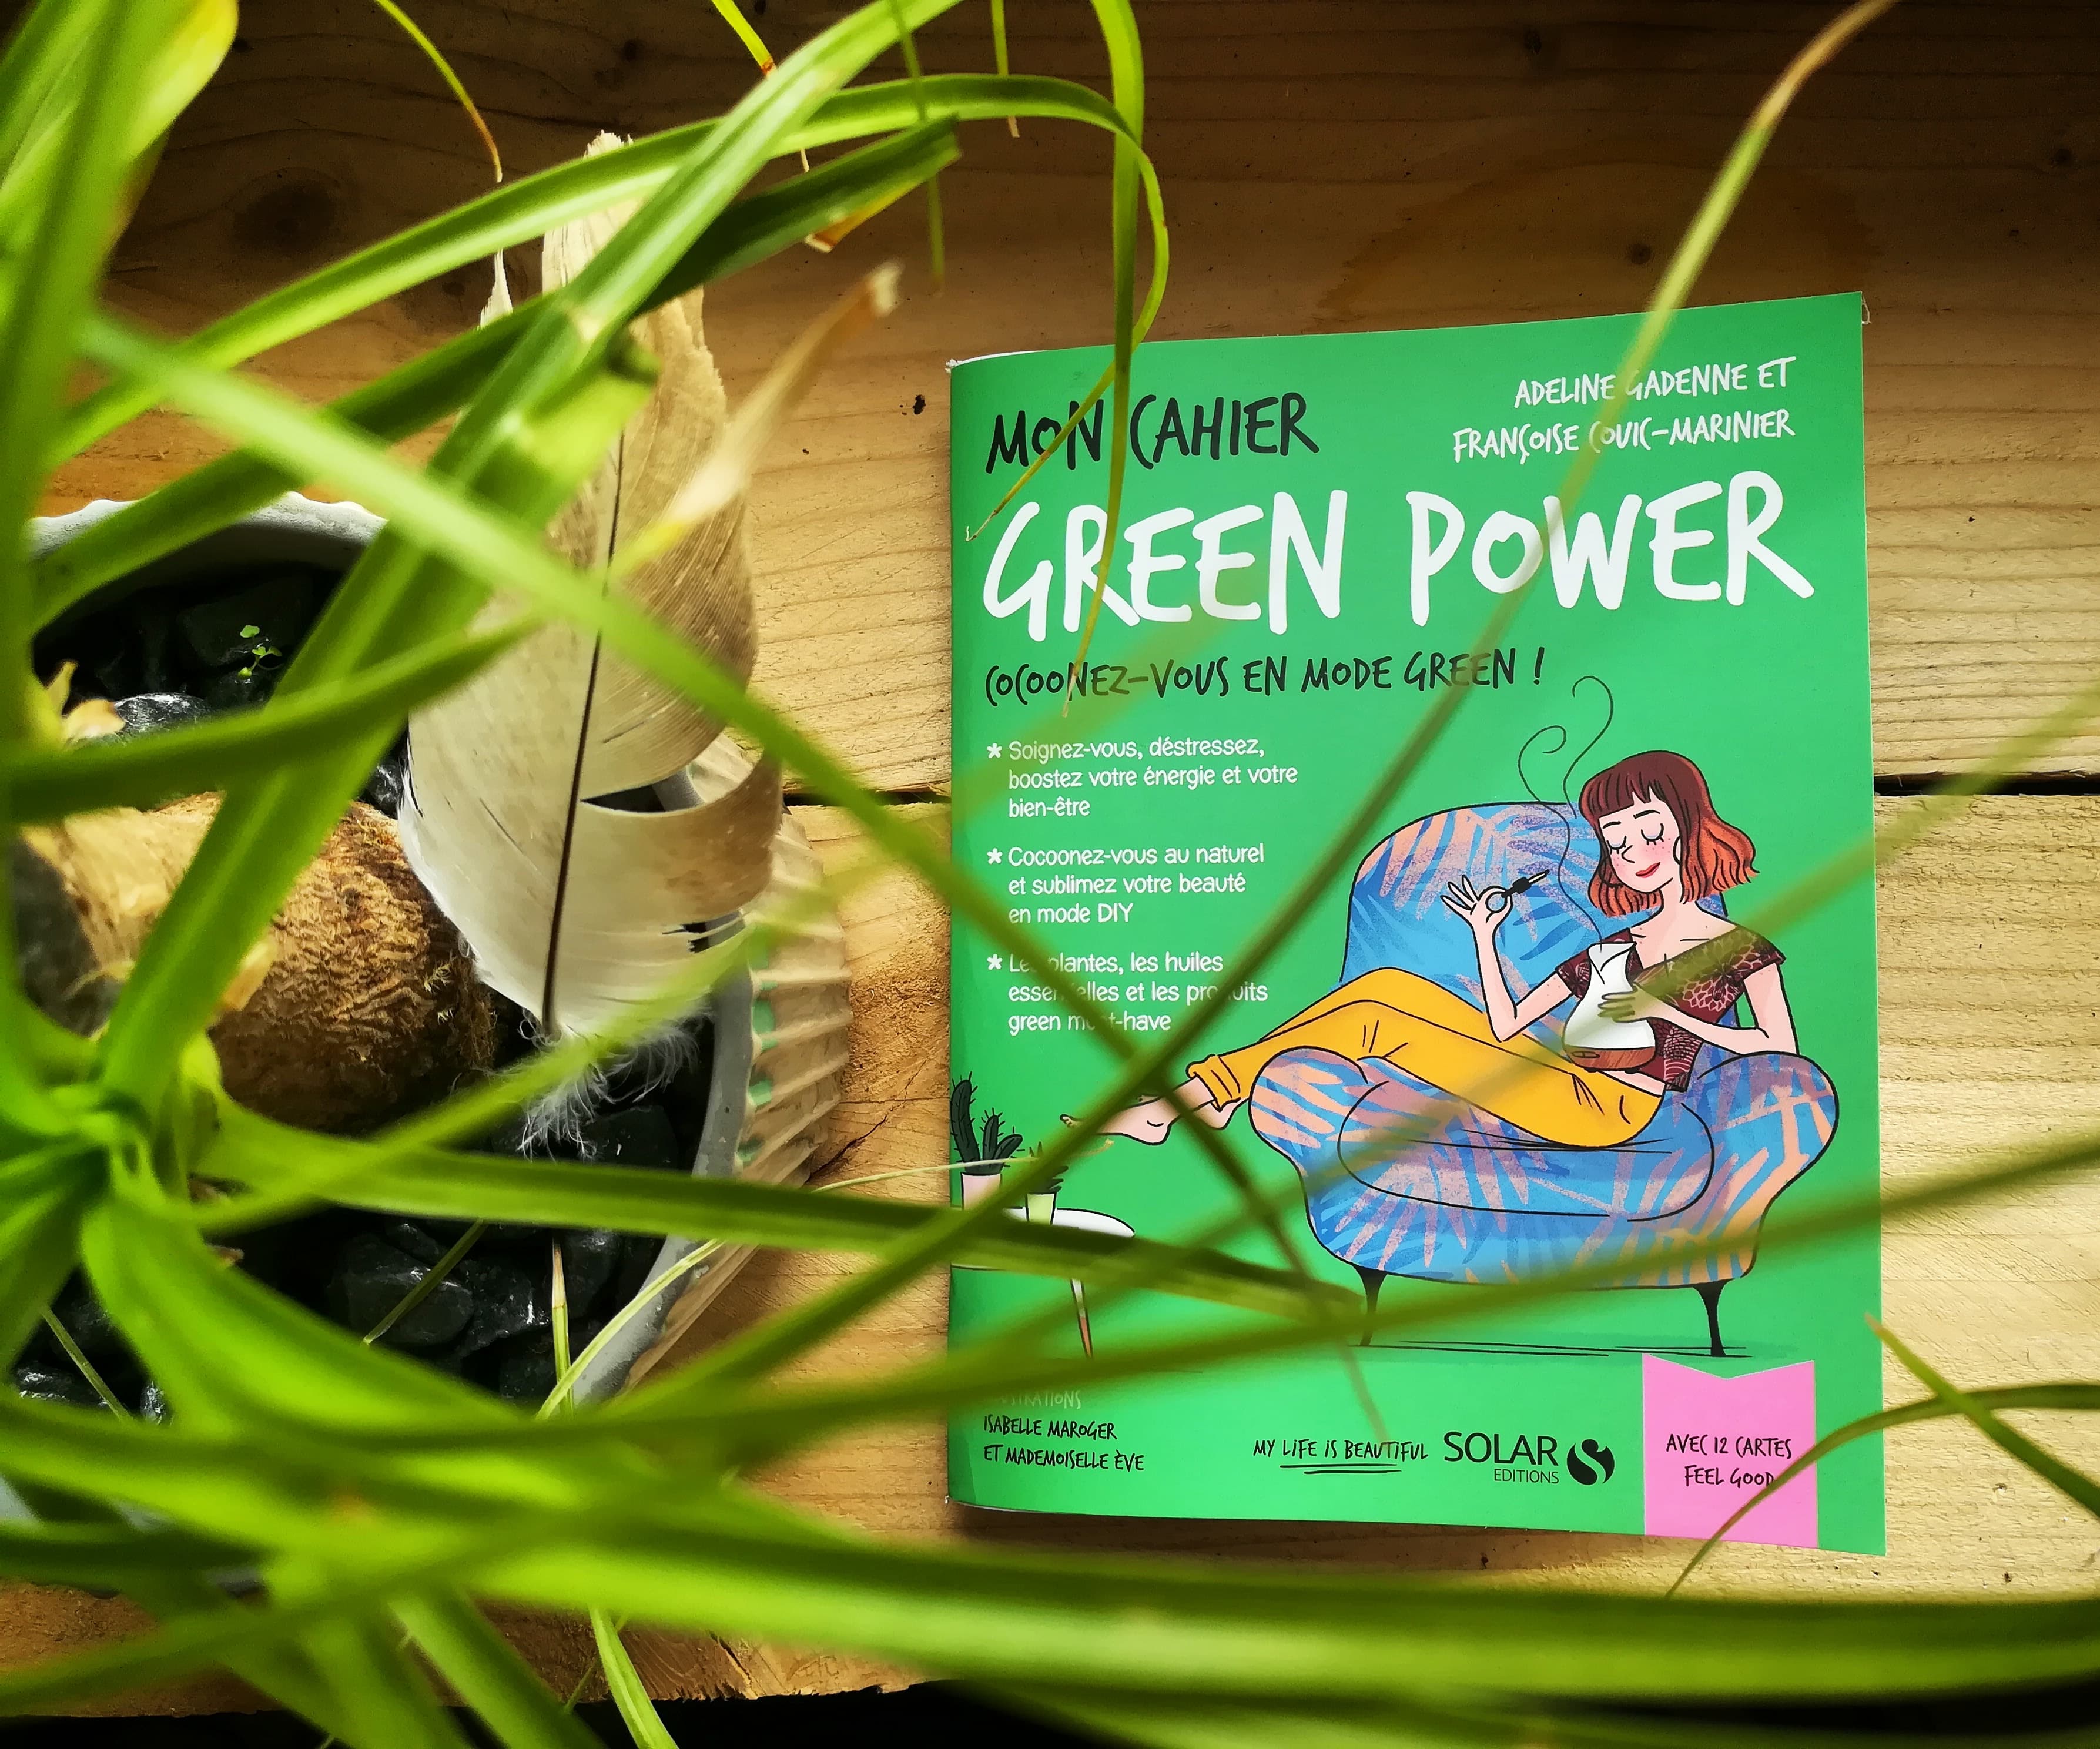 GC - mon cahier green power - solar - adeline gadenne (8)